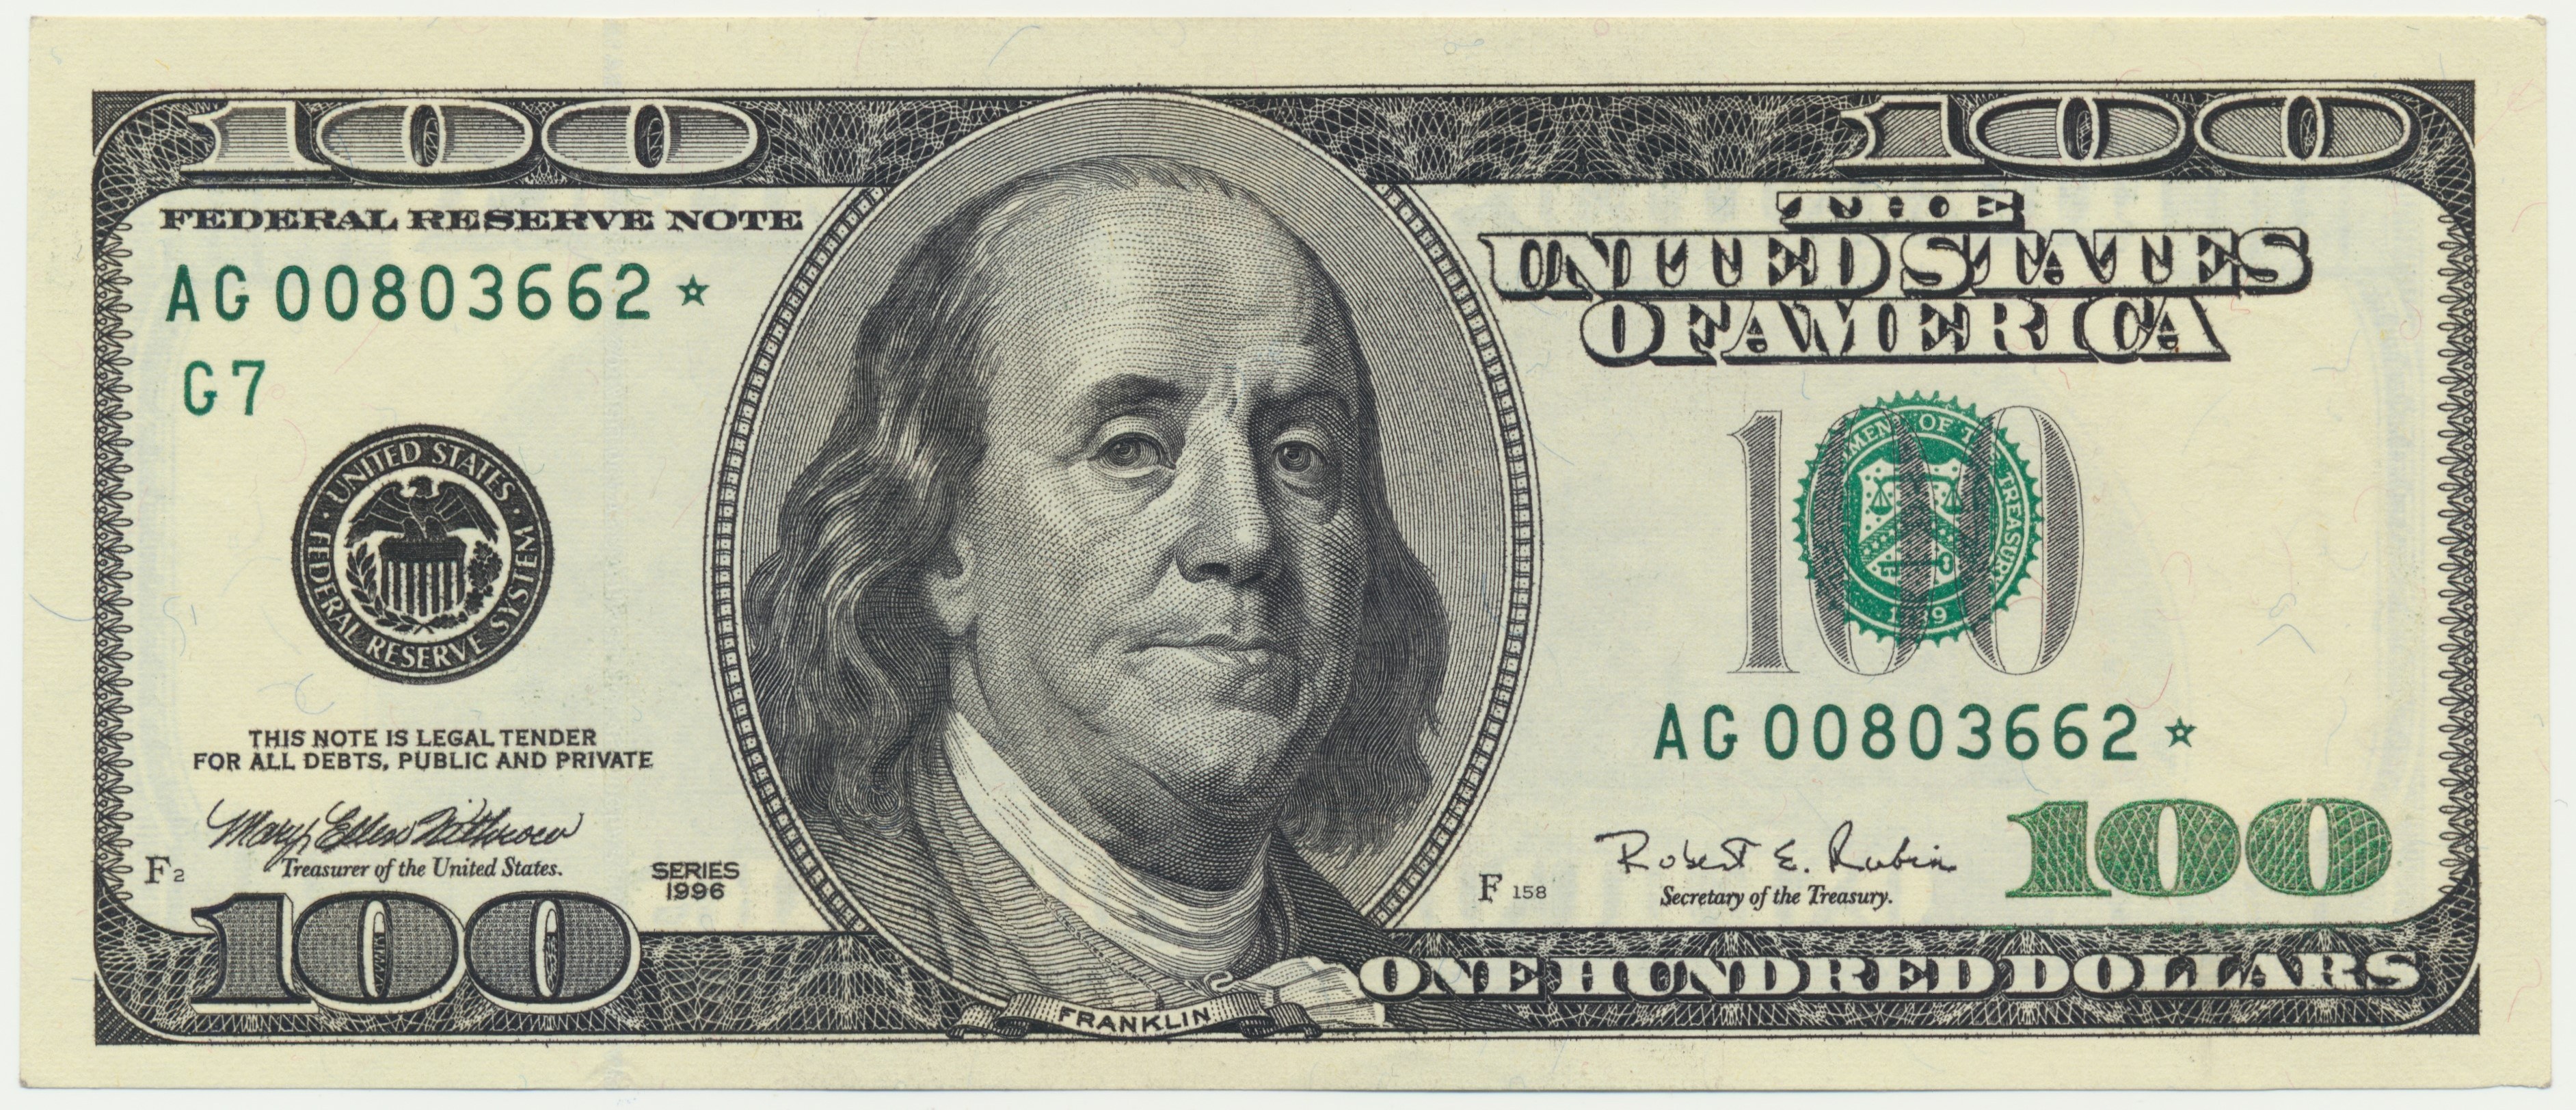 1400000 рублей в долларах. Бенджамин Франклин на 100 долларах. 100 Долларовая купюра с Бенджамином Франклином. Купюра 100 долларов 1996. Бенджамин Франклин фото на 100 долларах.